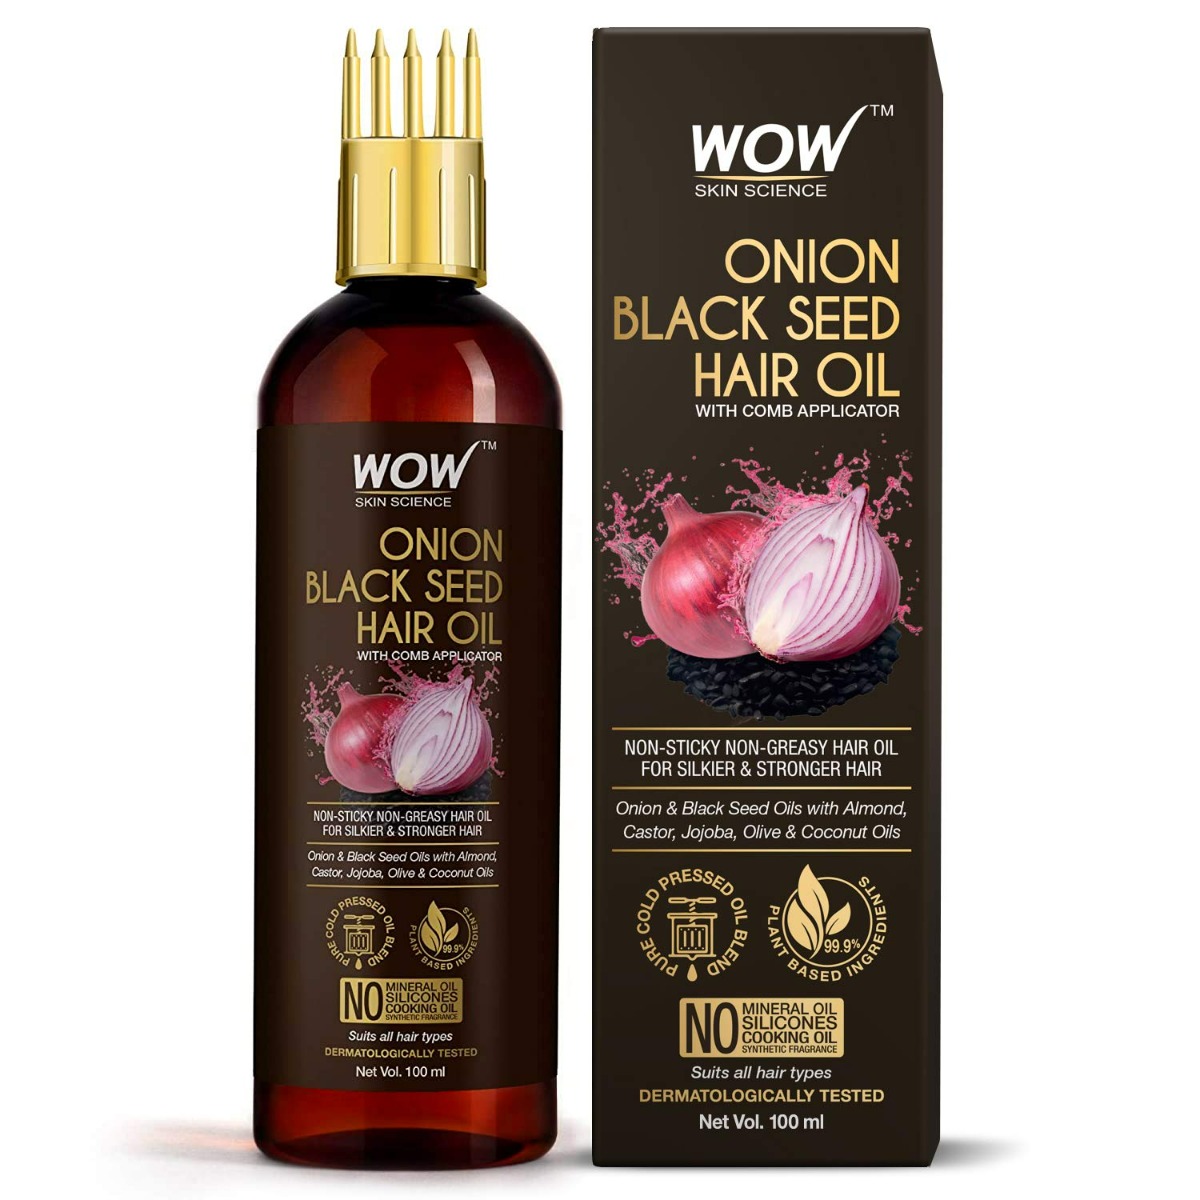 WOW Skin Science Onion Black Seed Hair Oil for Hair Growth and Hair Fall Control- 100 ml